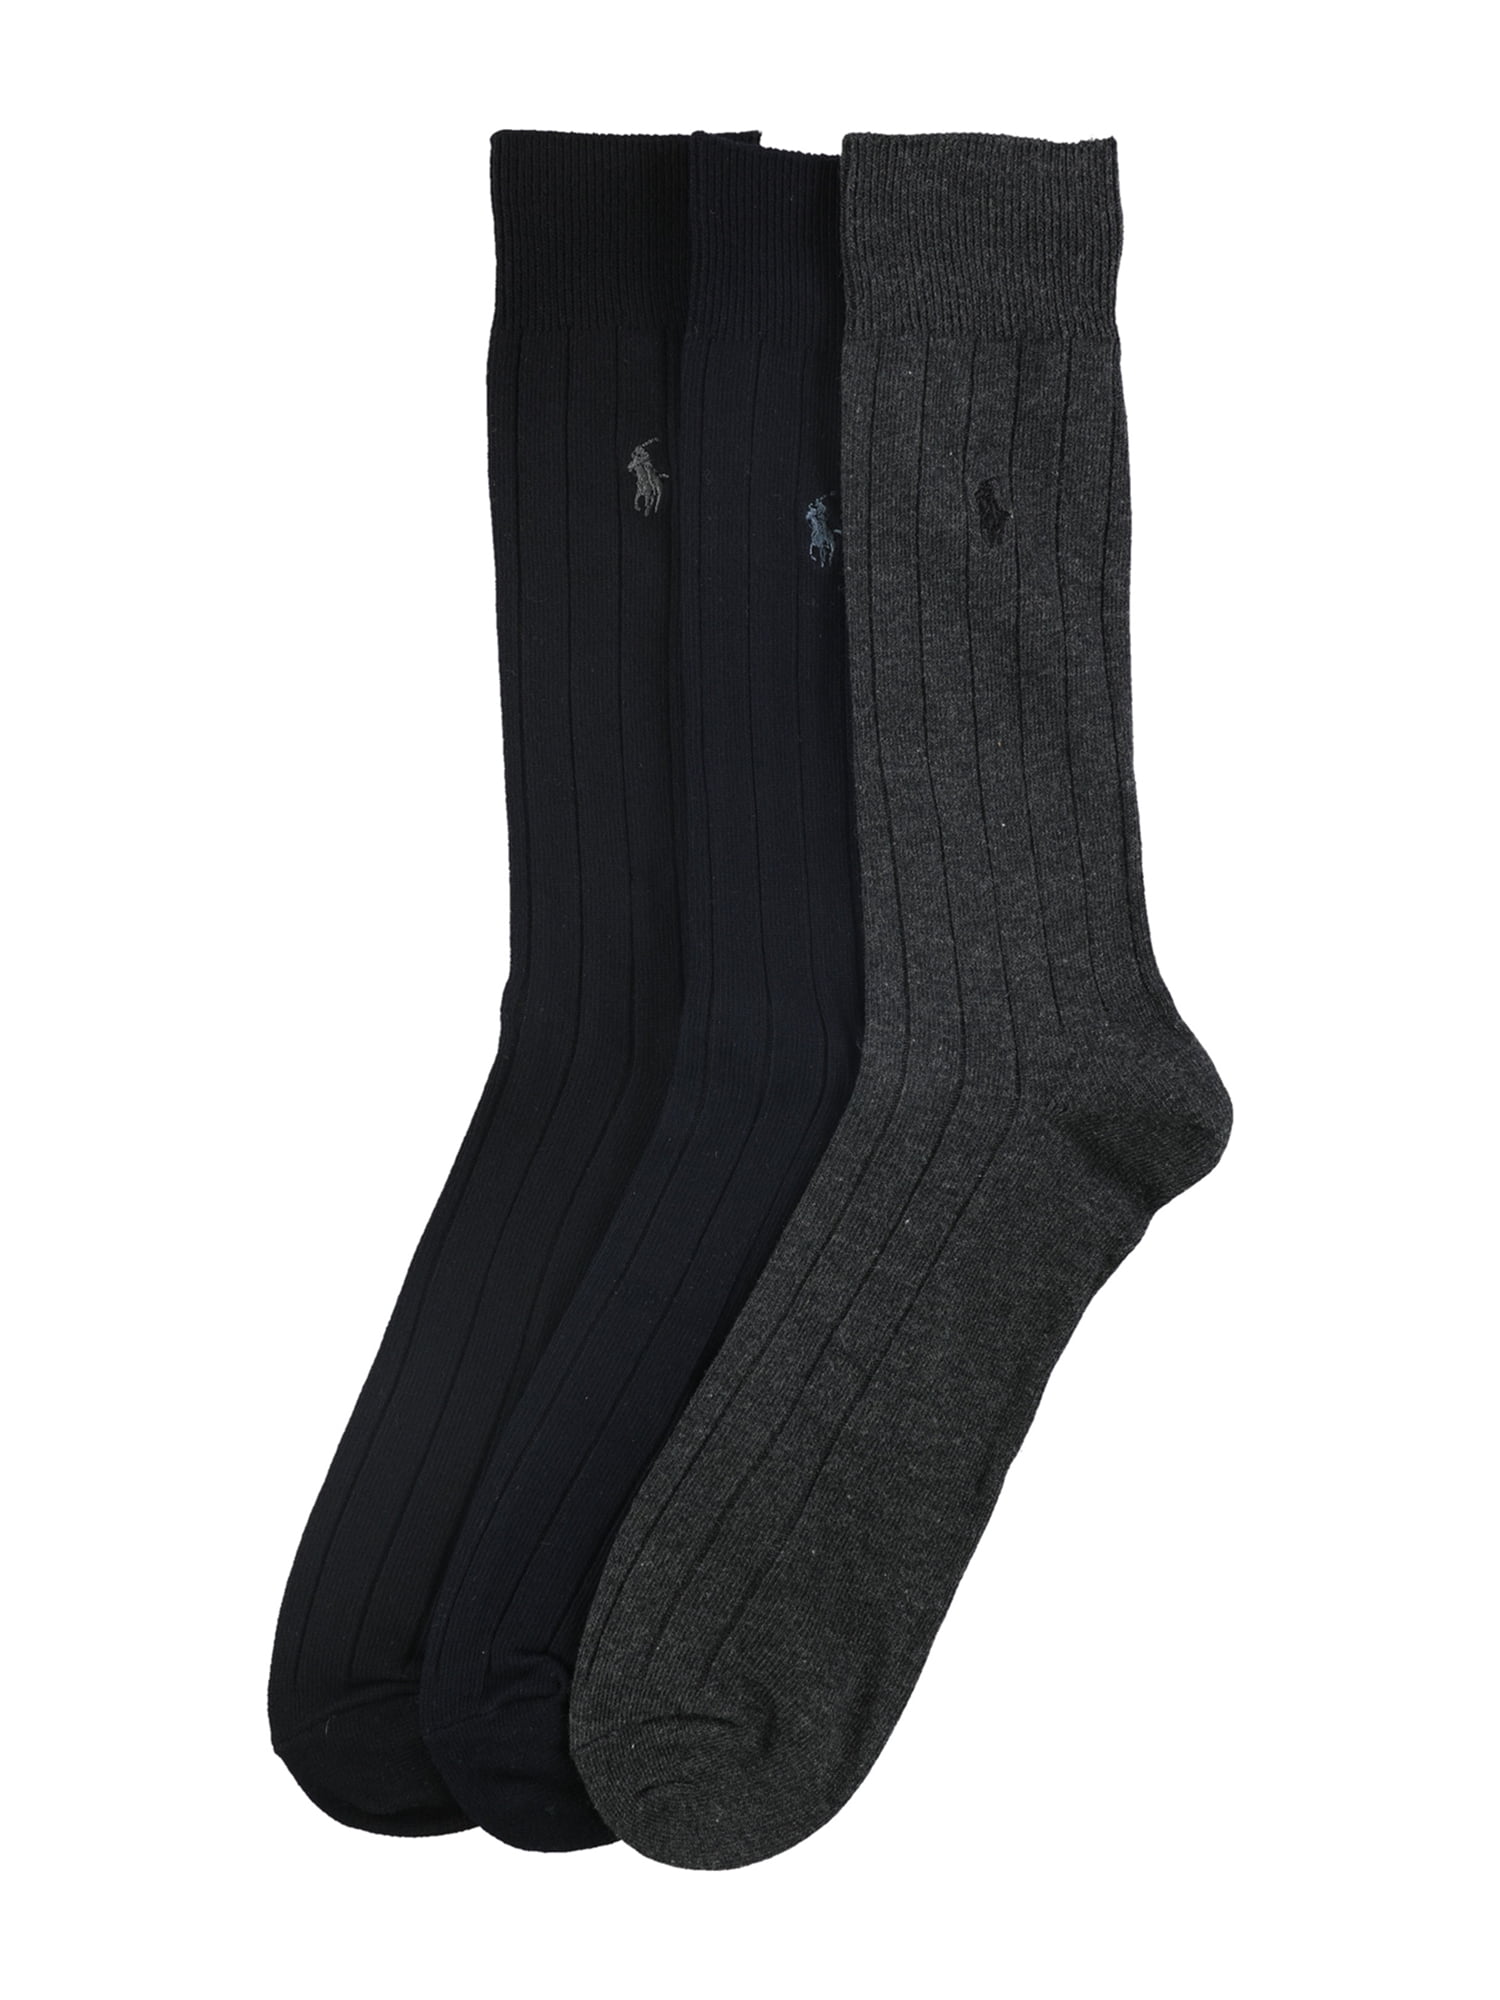 Ralph Lauren Mens 3 Pack Cotton Dress Socks bkast 12-16 | Walmart Canada